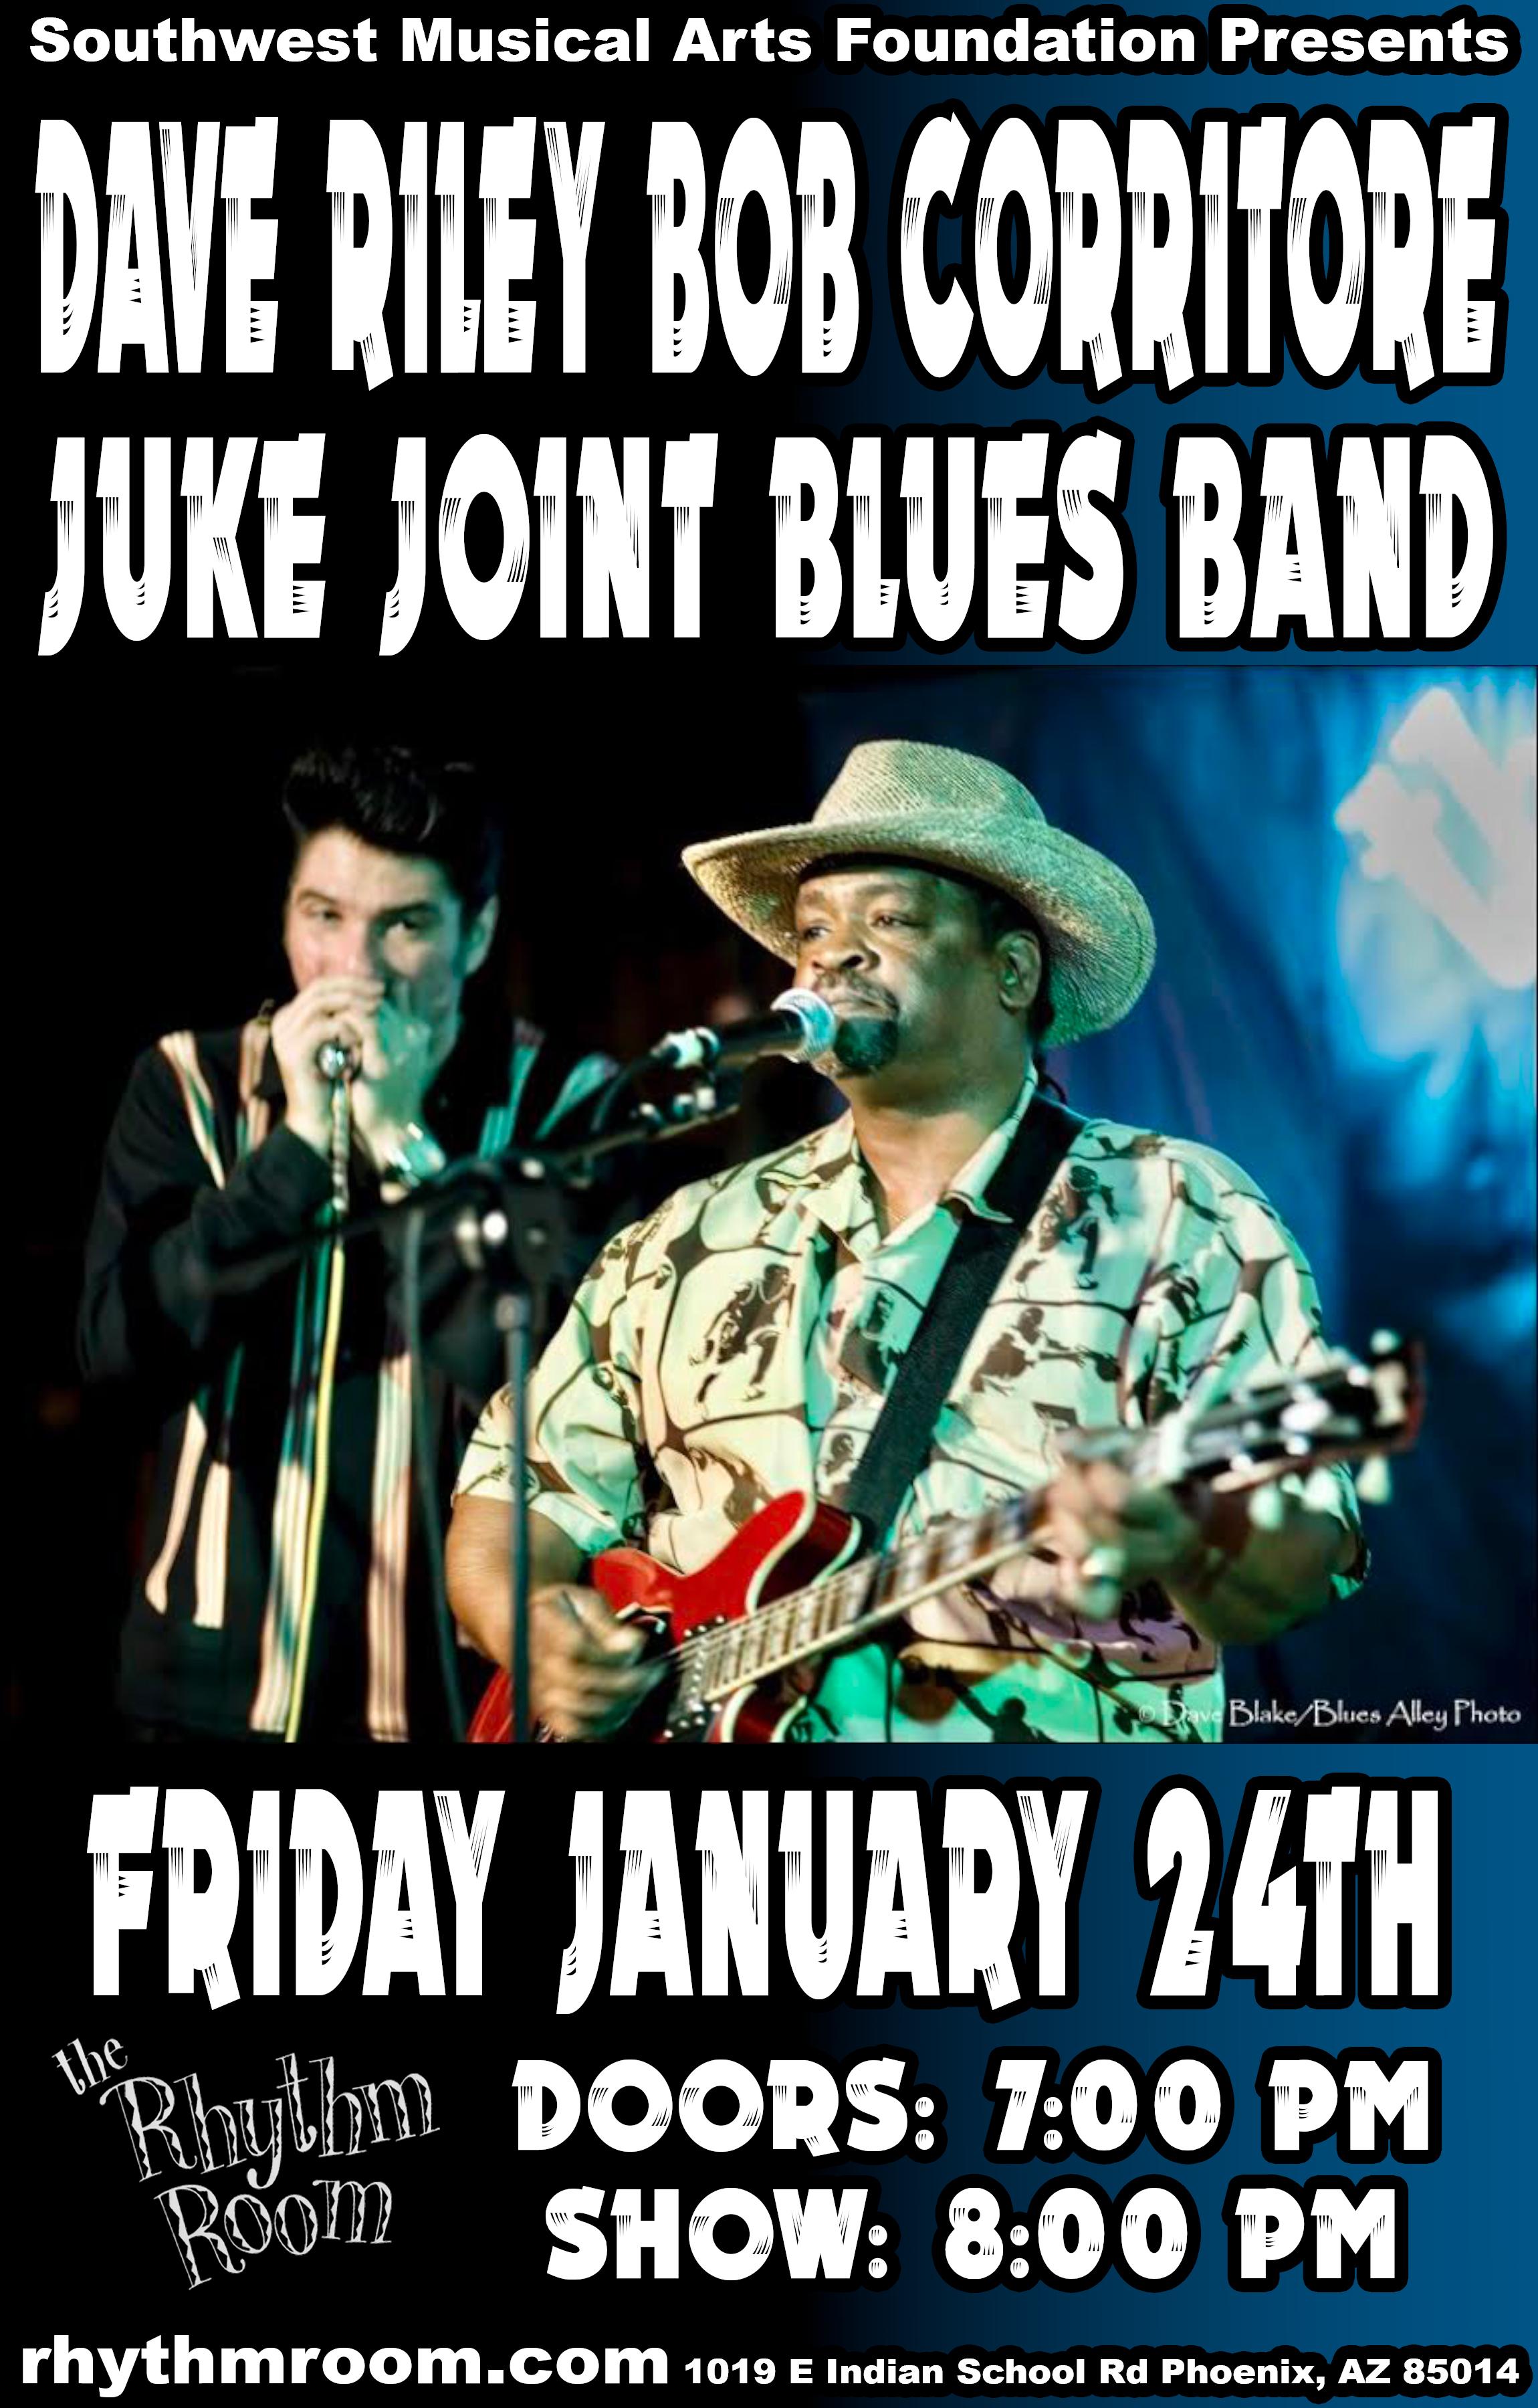 Dave Riley / Bob Corritore Juke Joint Blues Band